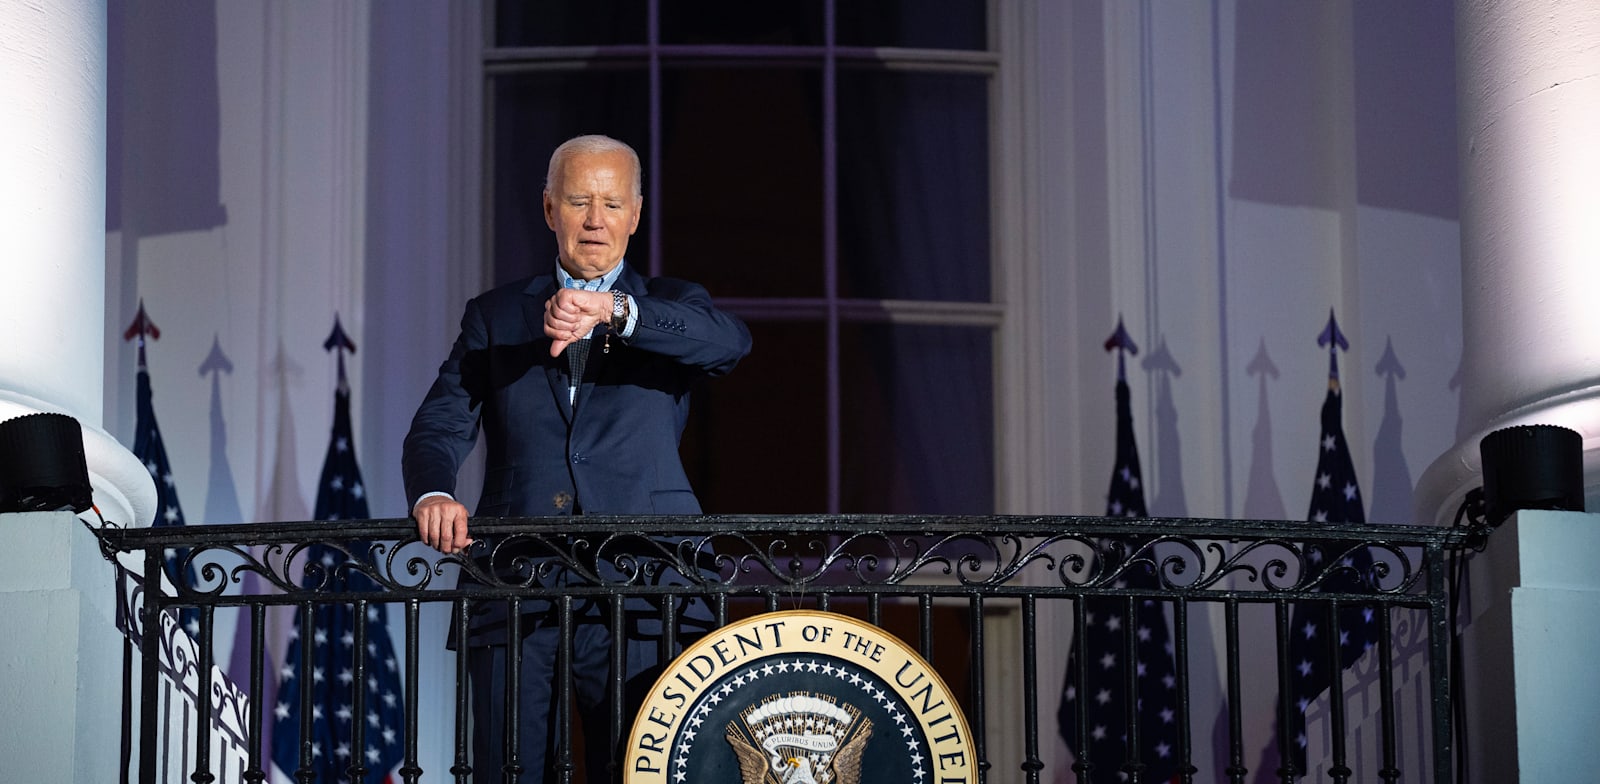 Biden’s Resolute Commitment: Despite Health Concerns, President Biden Remains Steadfast in His Bid for the Presidency